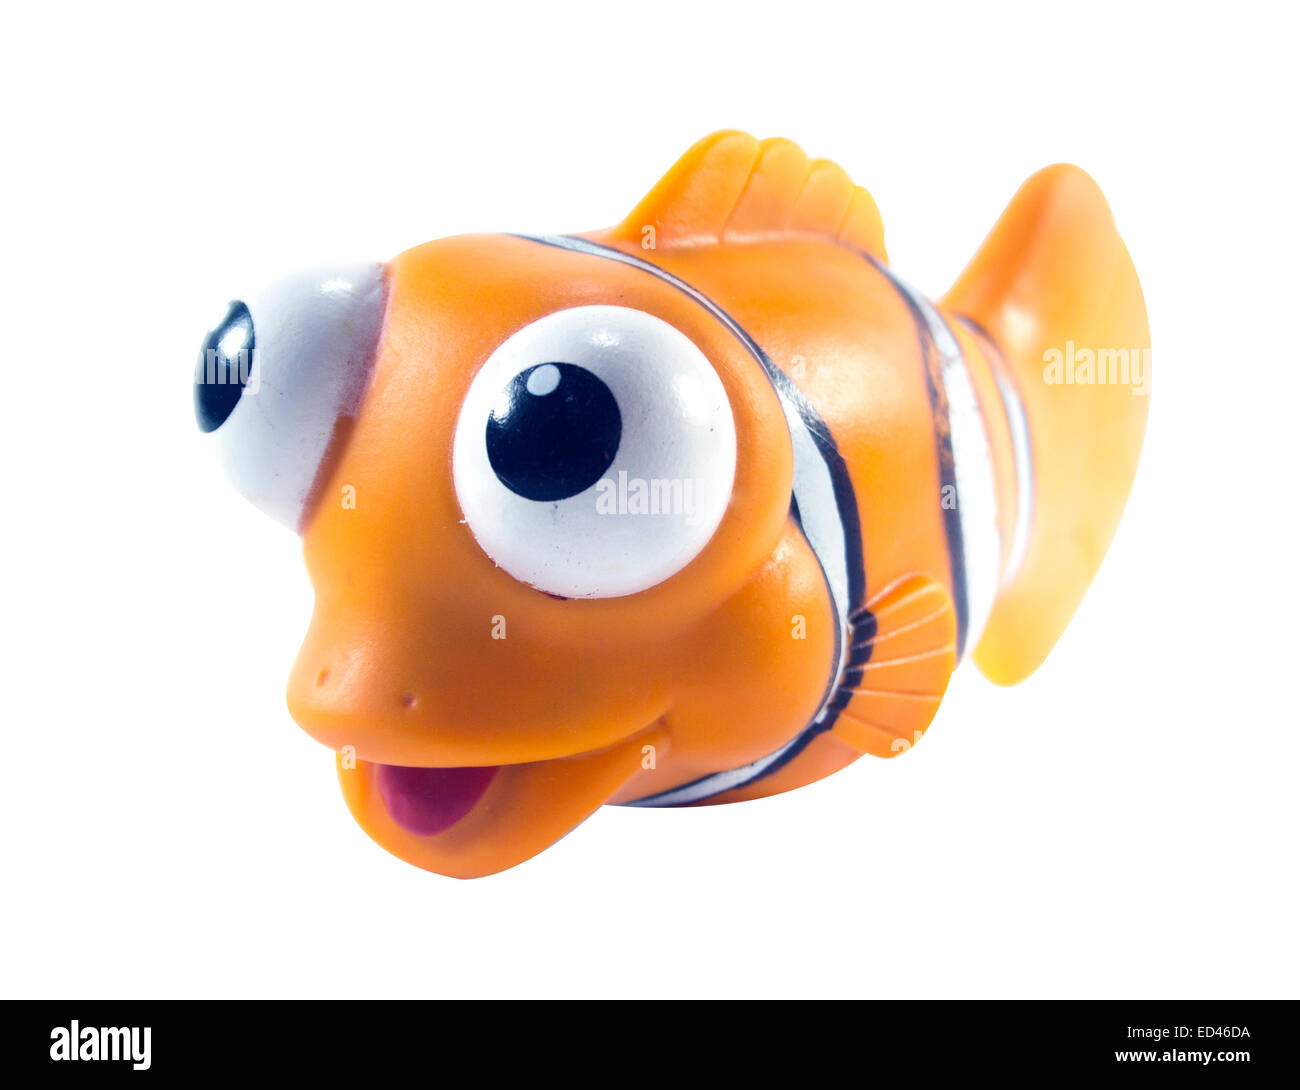 Amman, Jordan - November 1, 2014: Marlin cartoon fish toy character of  Finding Nemo movie from Disney Pixar animation studio Stock Photo - Alamy